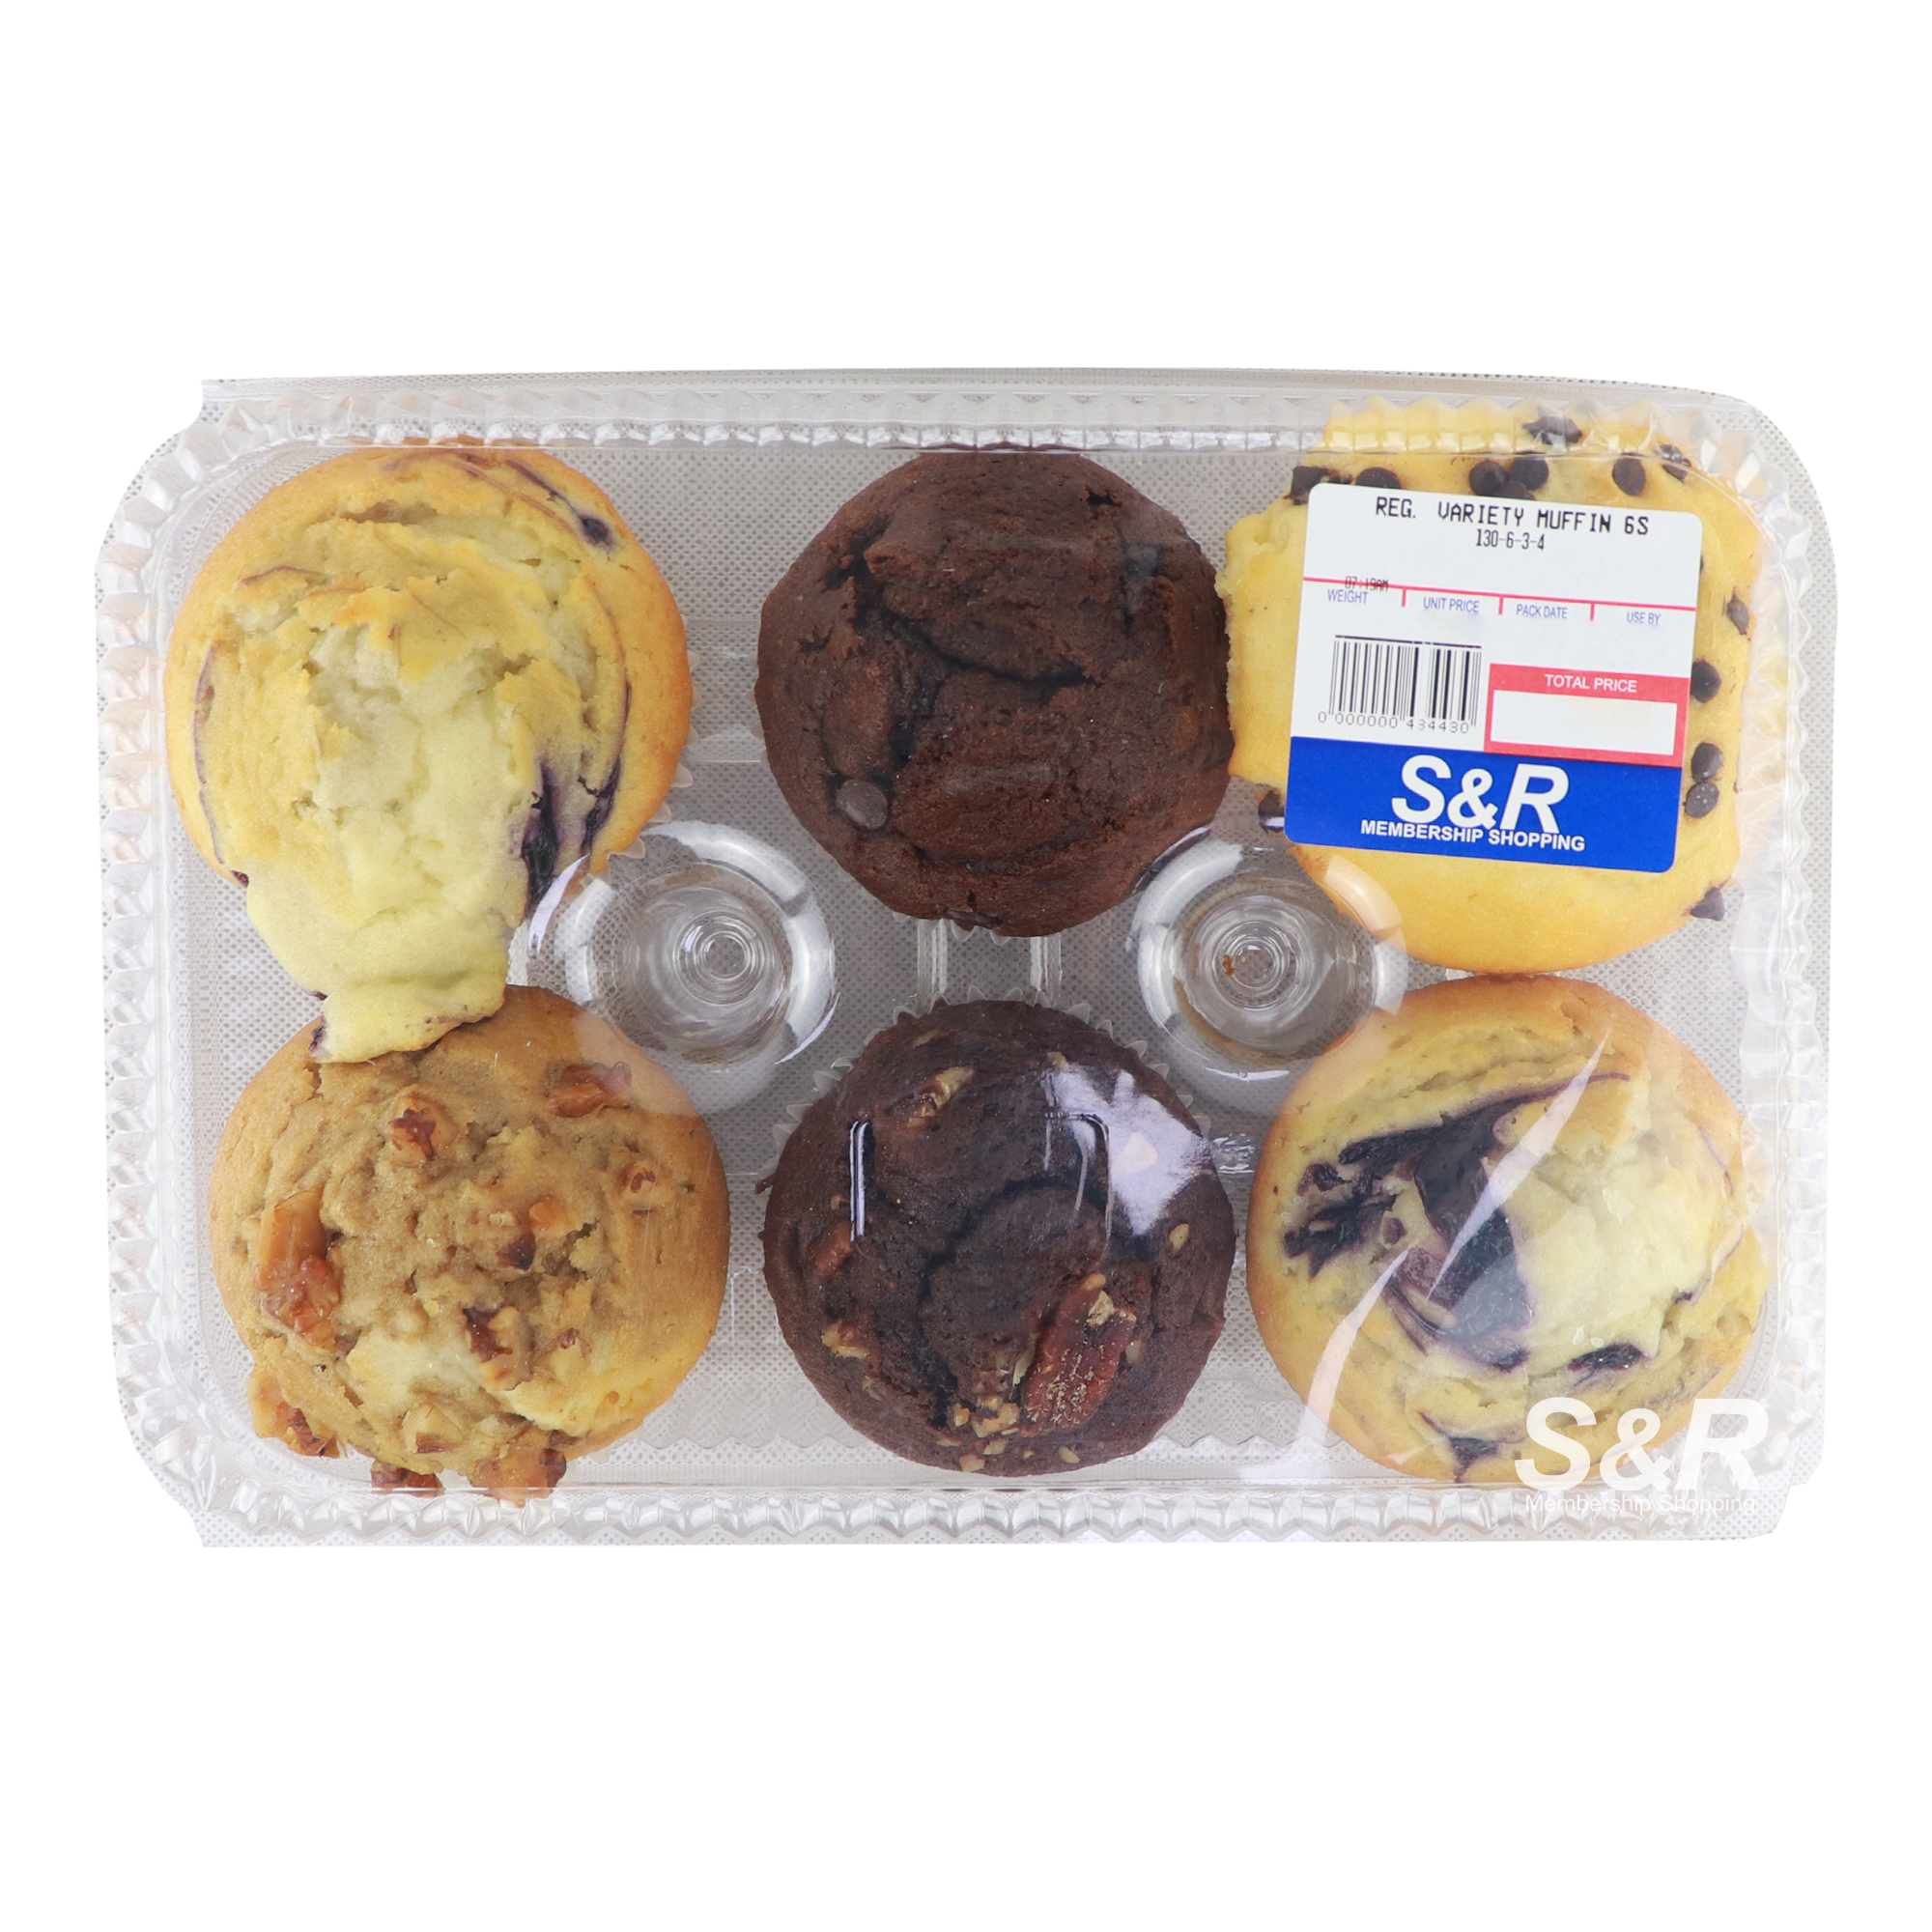 S&R Regular Variety Muffins 6pcs